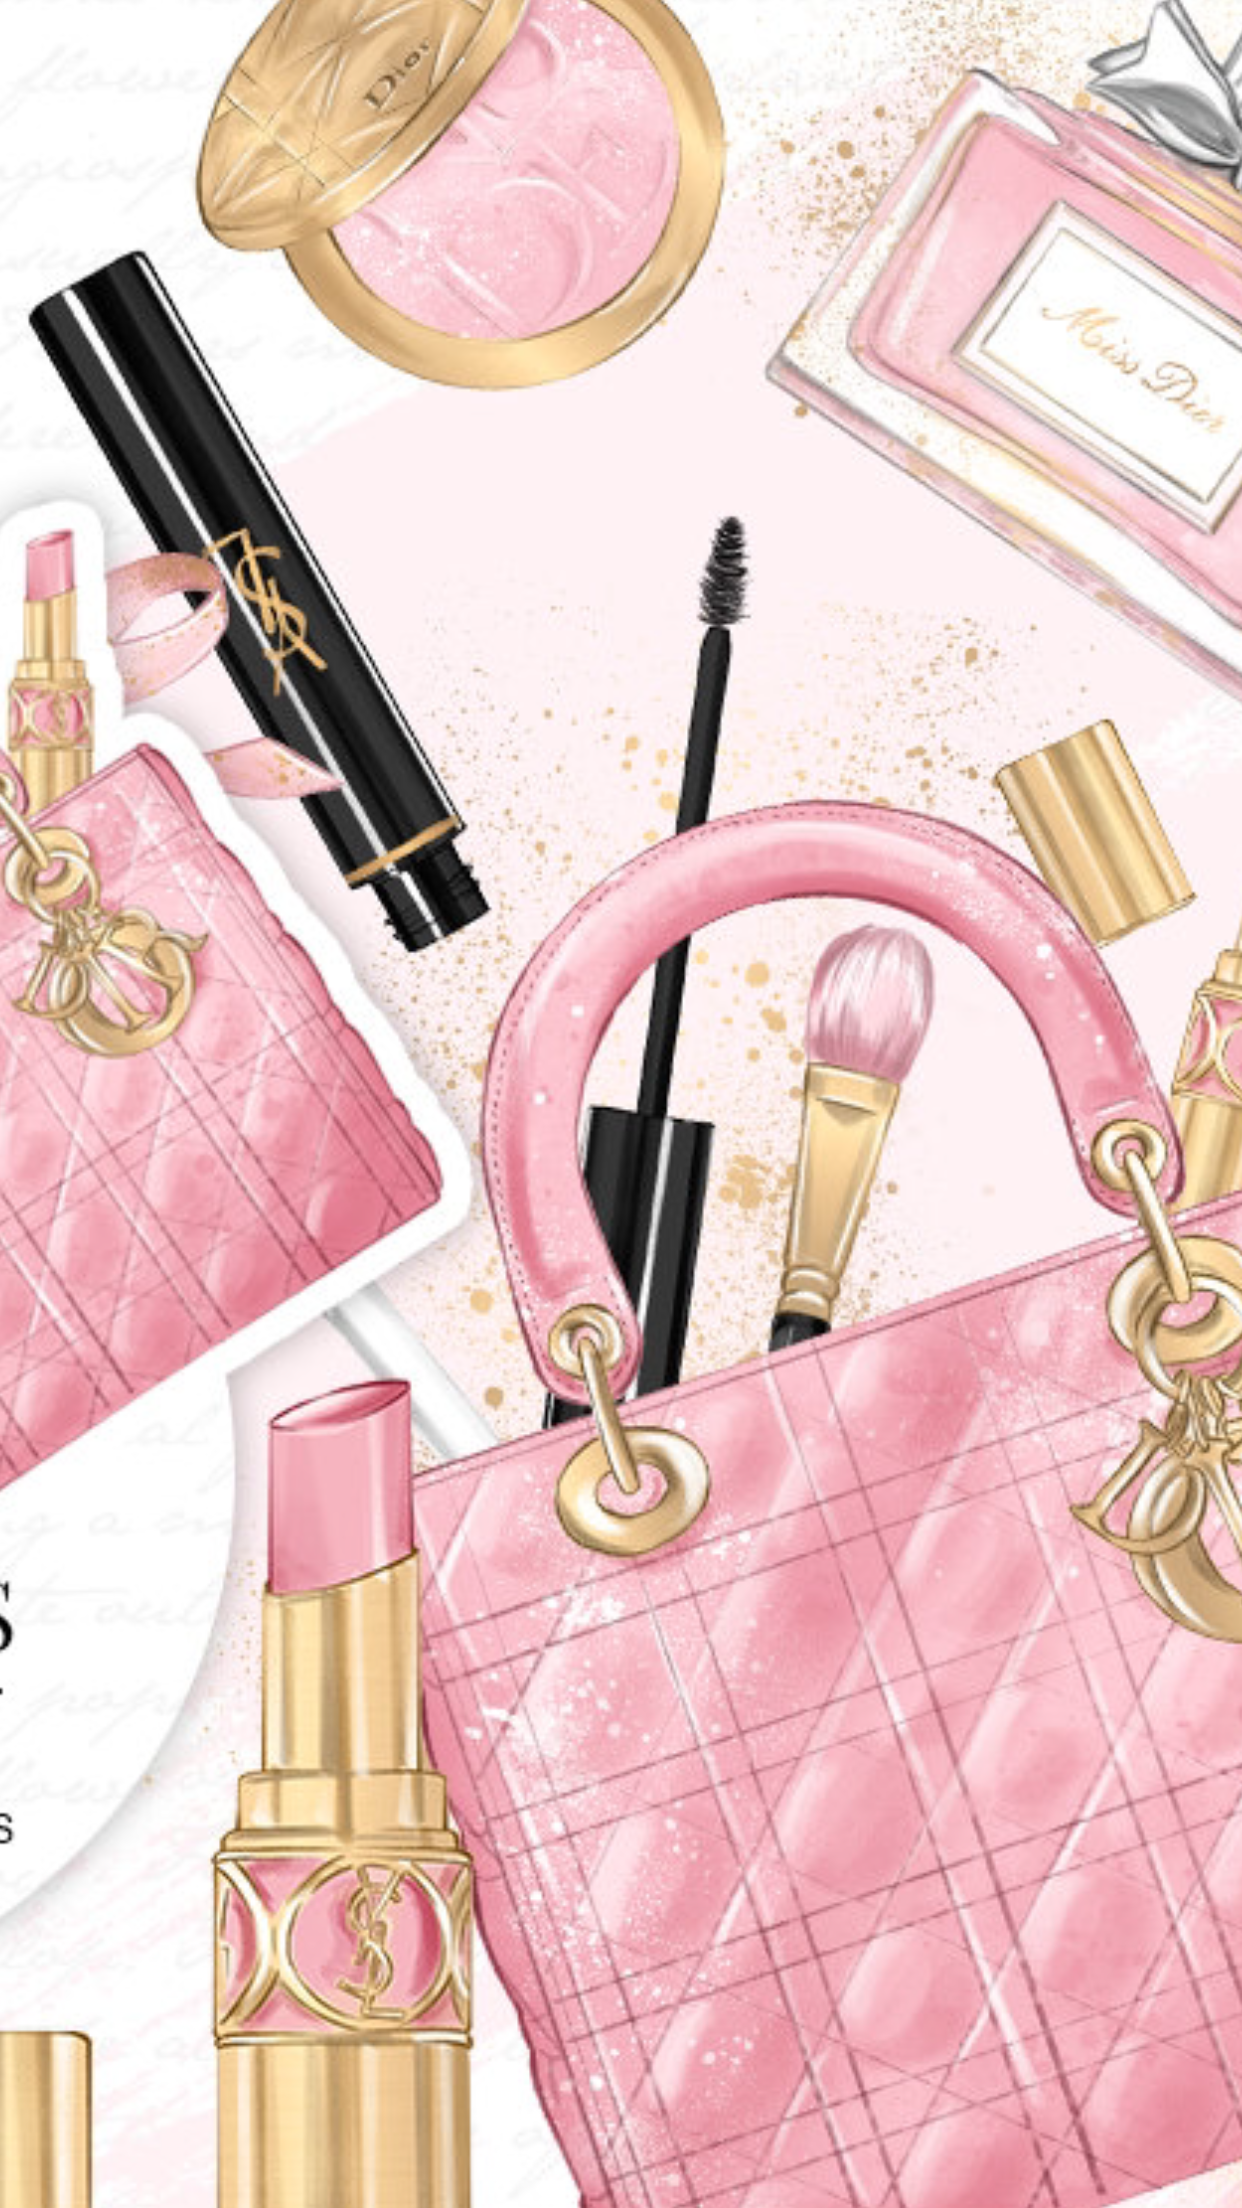 makeup wallpaper iphone,pink,handbag,beauty,bag,perfume